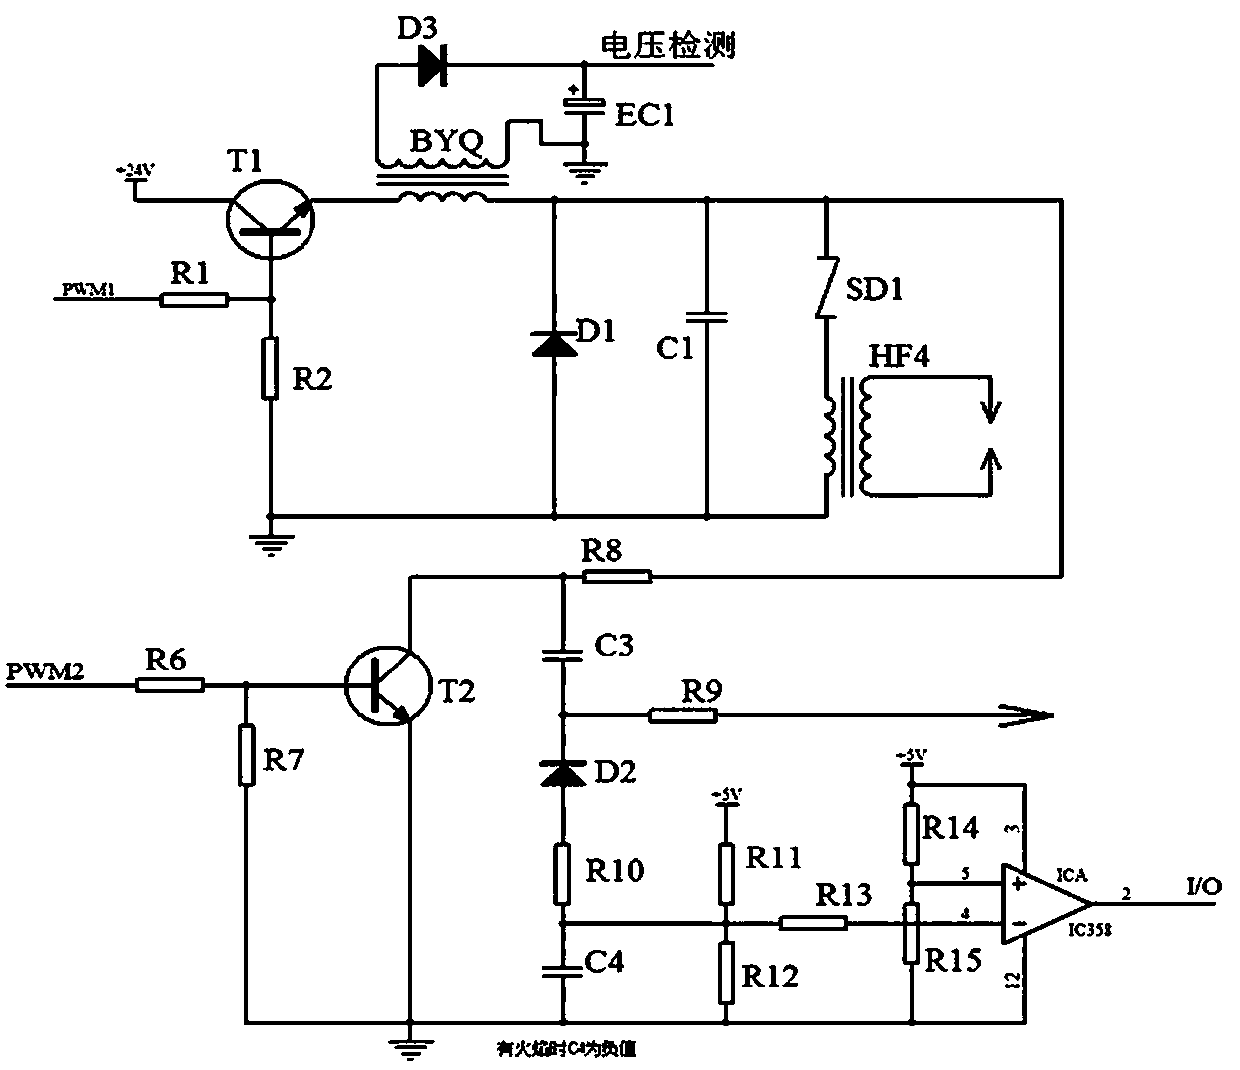 Pulse ignition circuit based on Buck principle and gas wall-hanging furnace